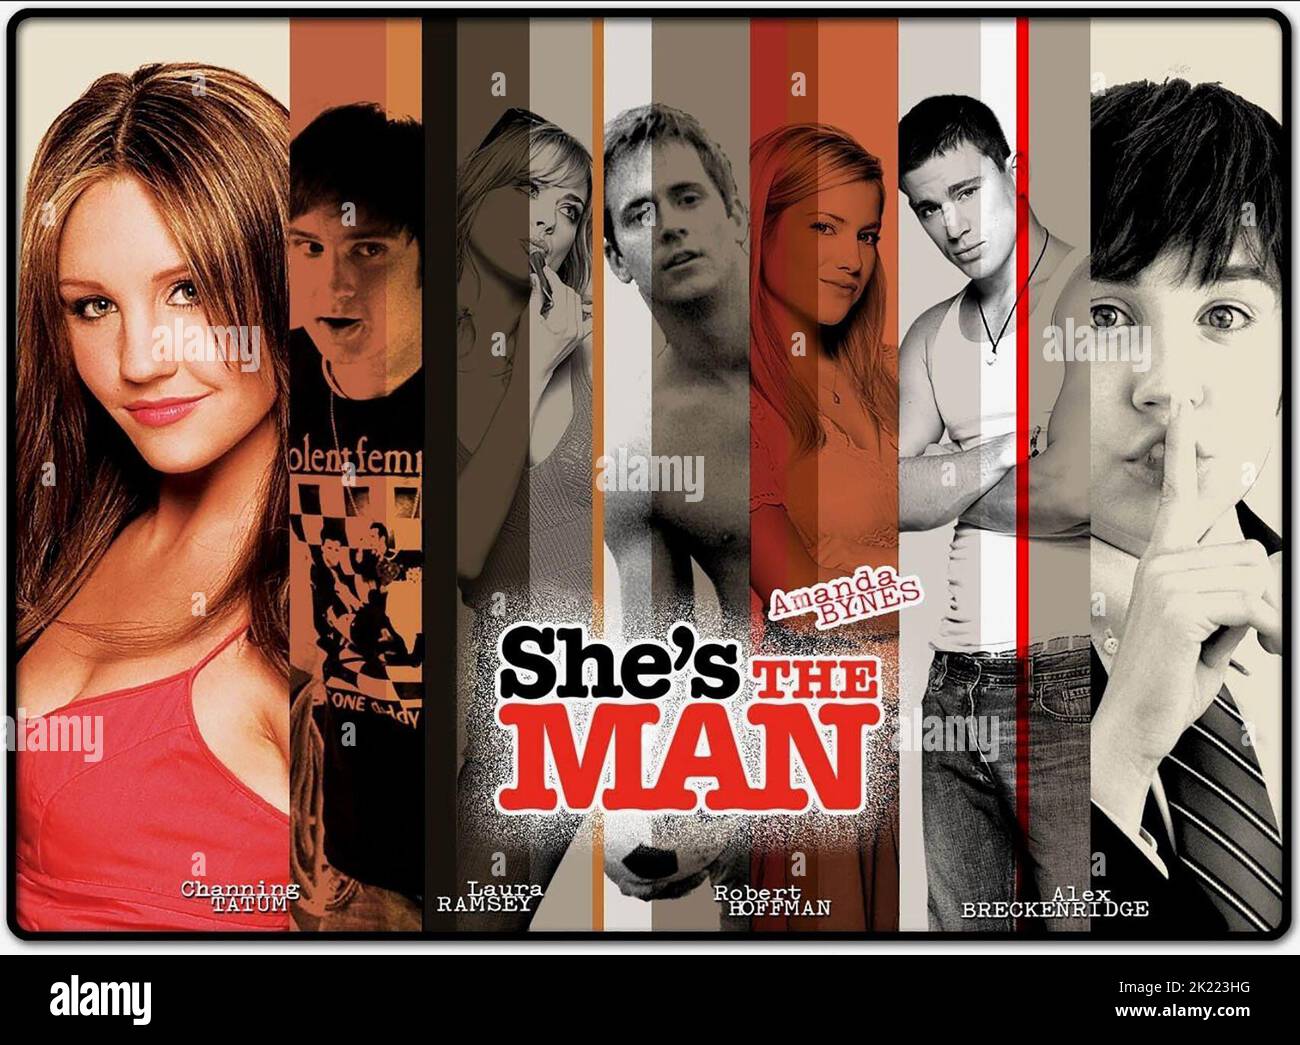 She s sweet. Она мужчина 2006. Она — мужчина (2005).